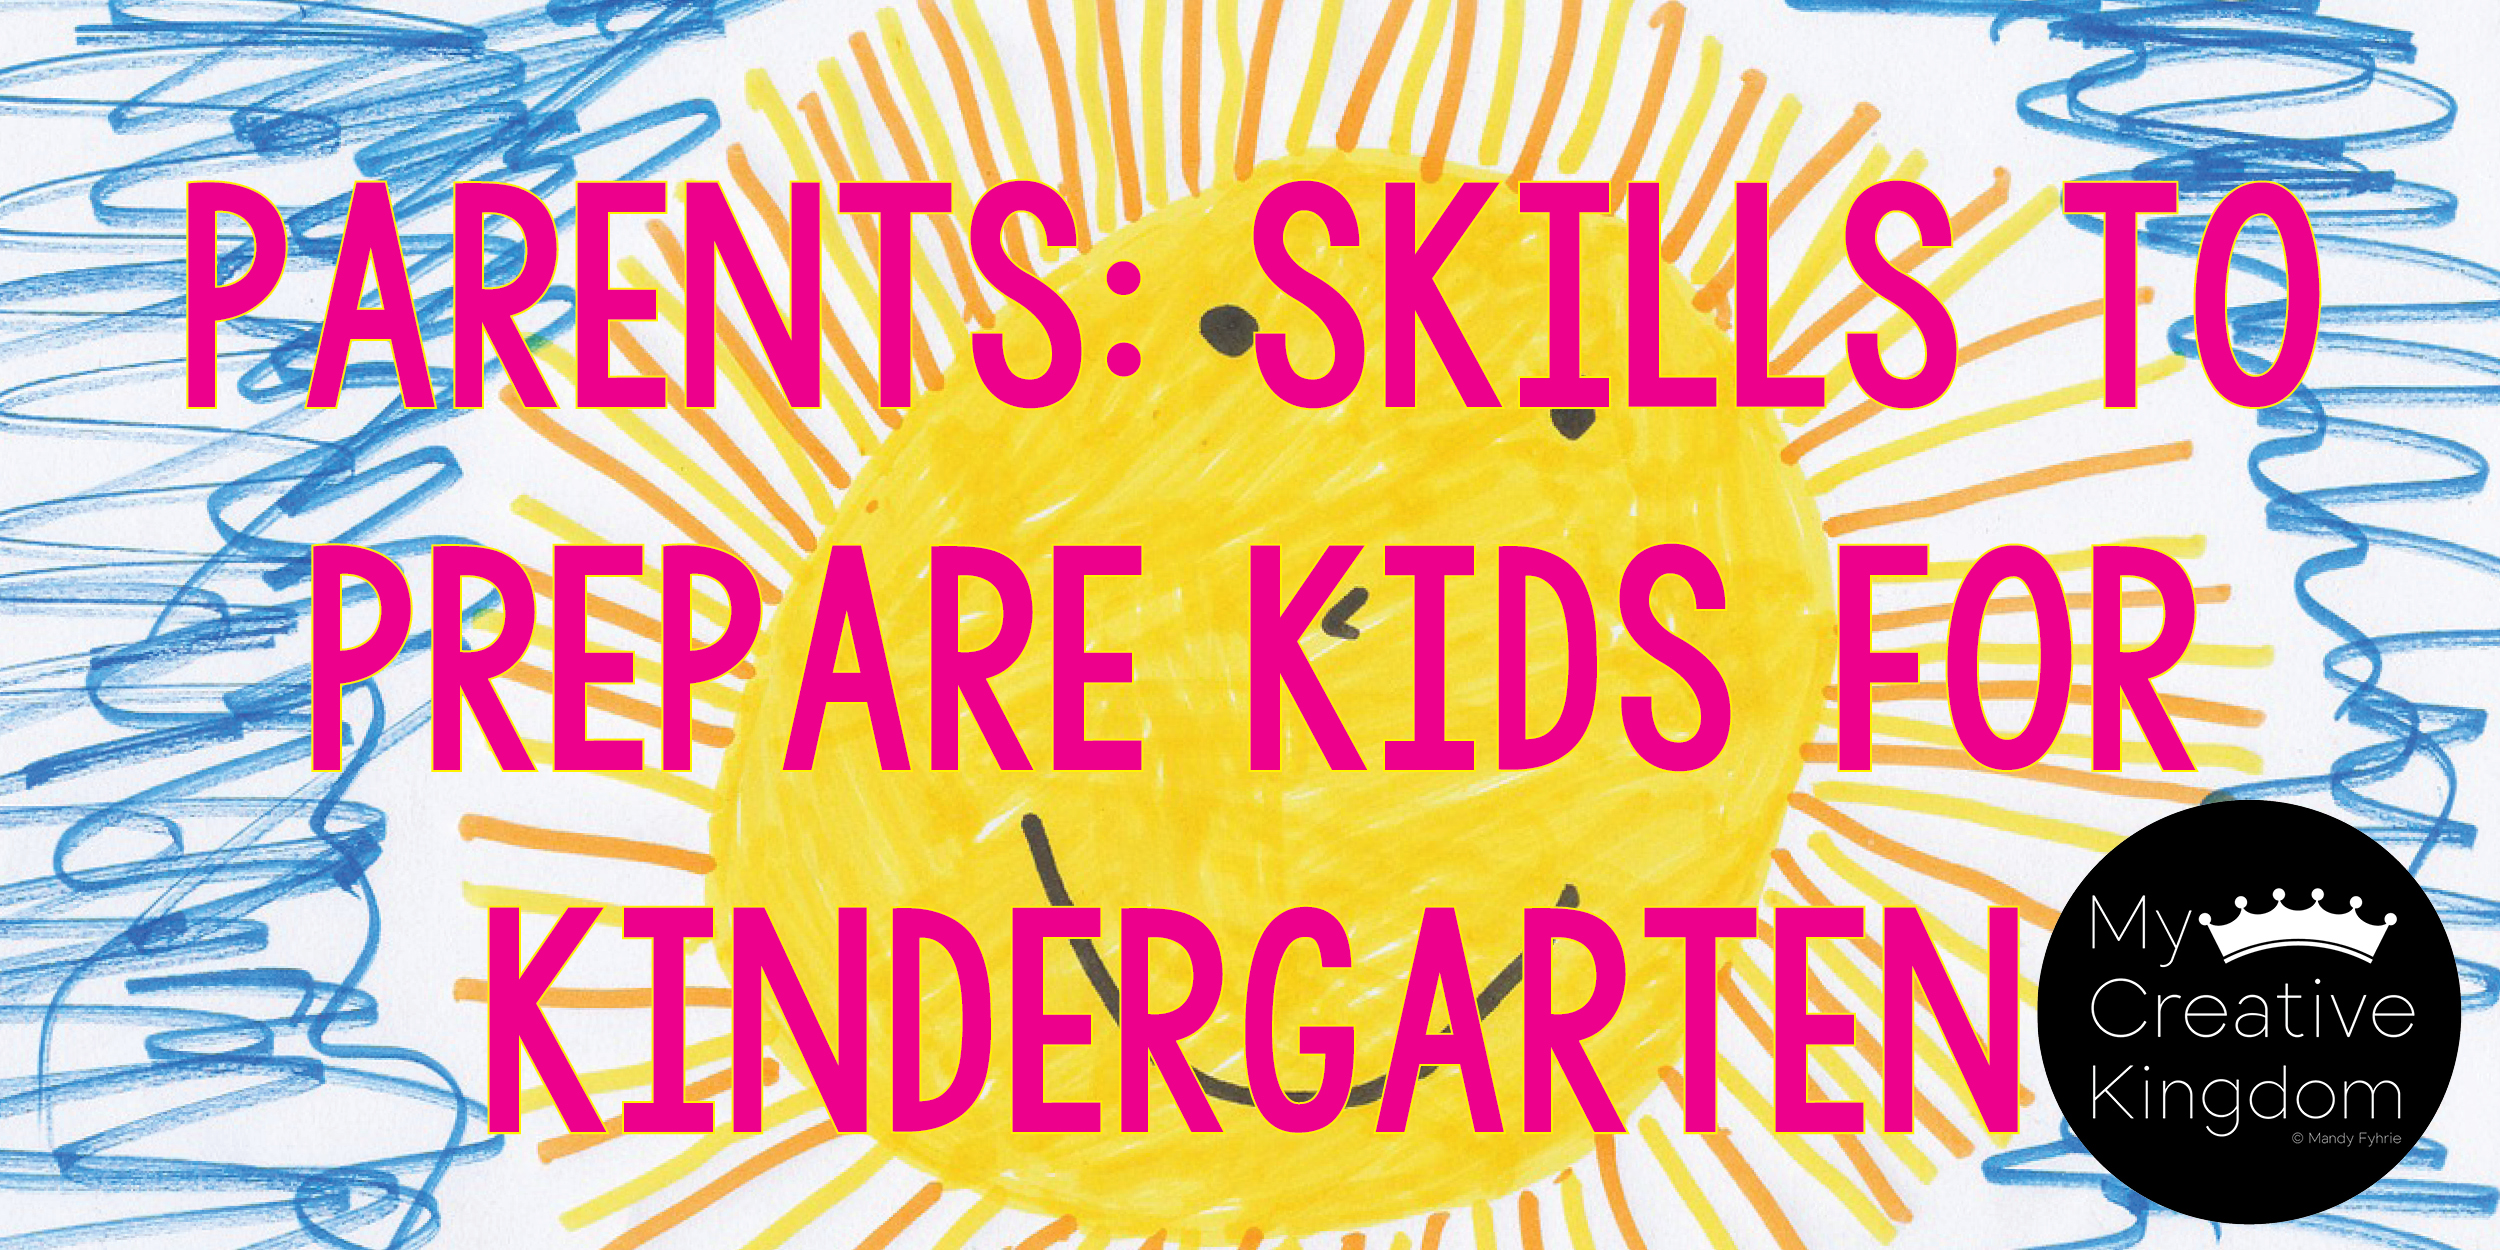 Parents:Skills to Prepare kids for Kindergarten PART 2